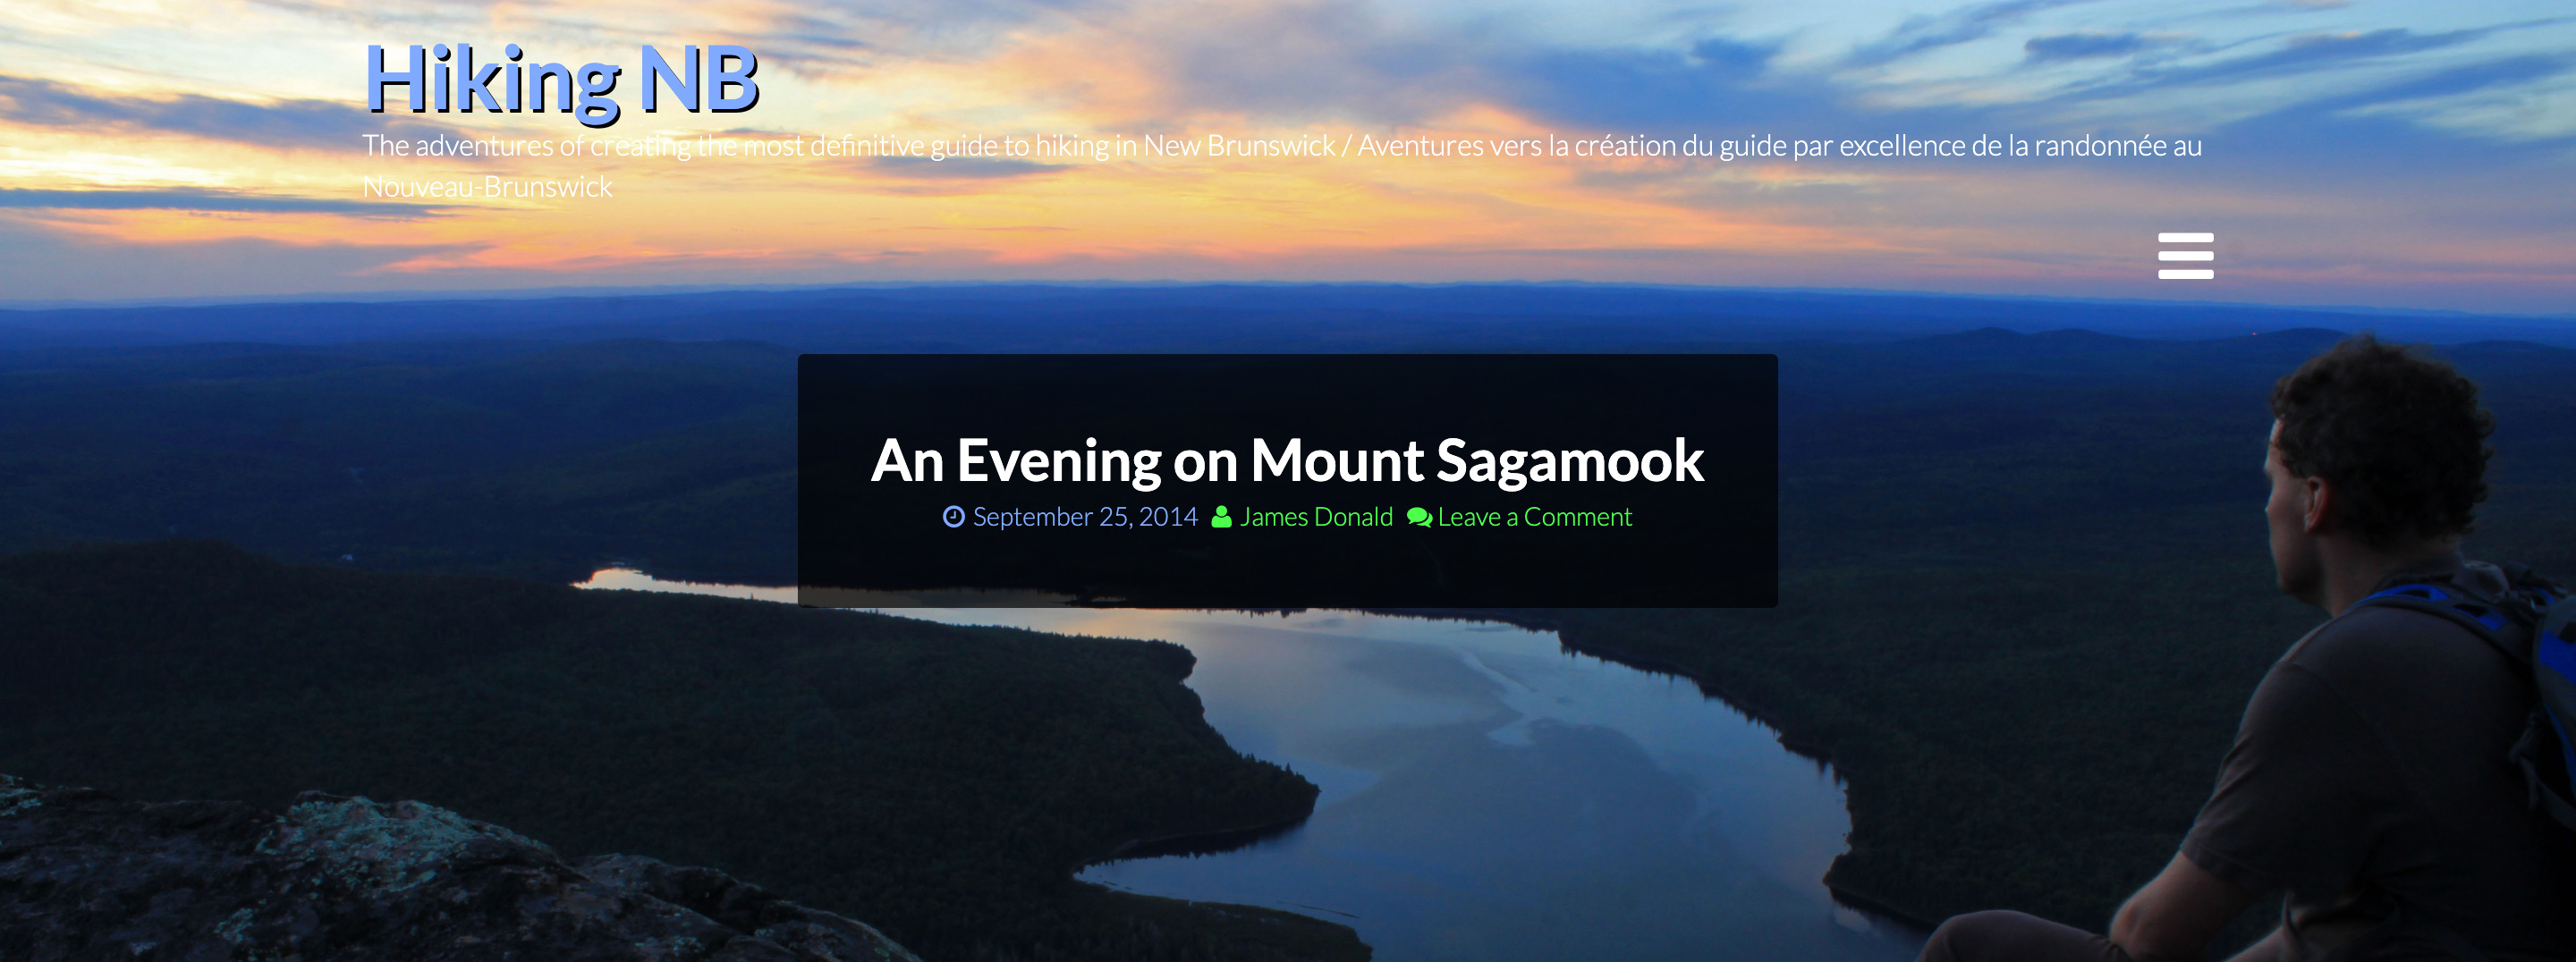 An Evening on Mount Sagamook Blog Post